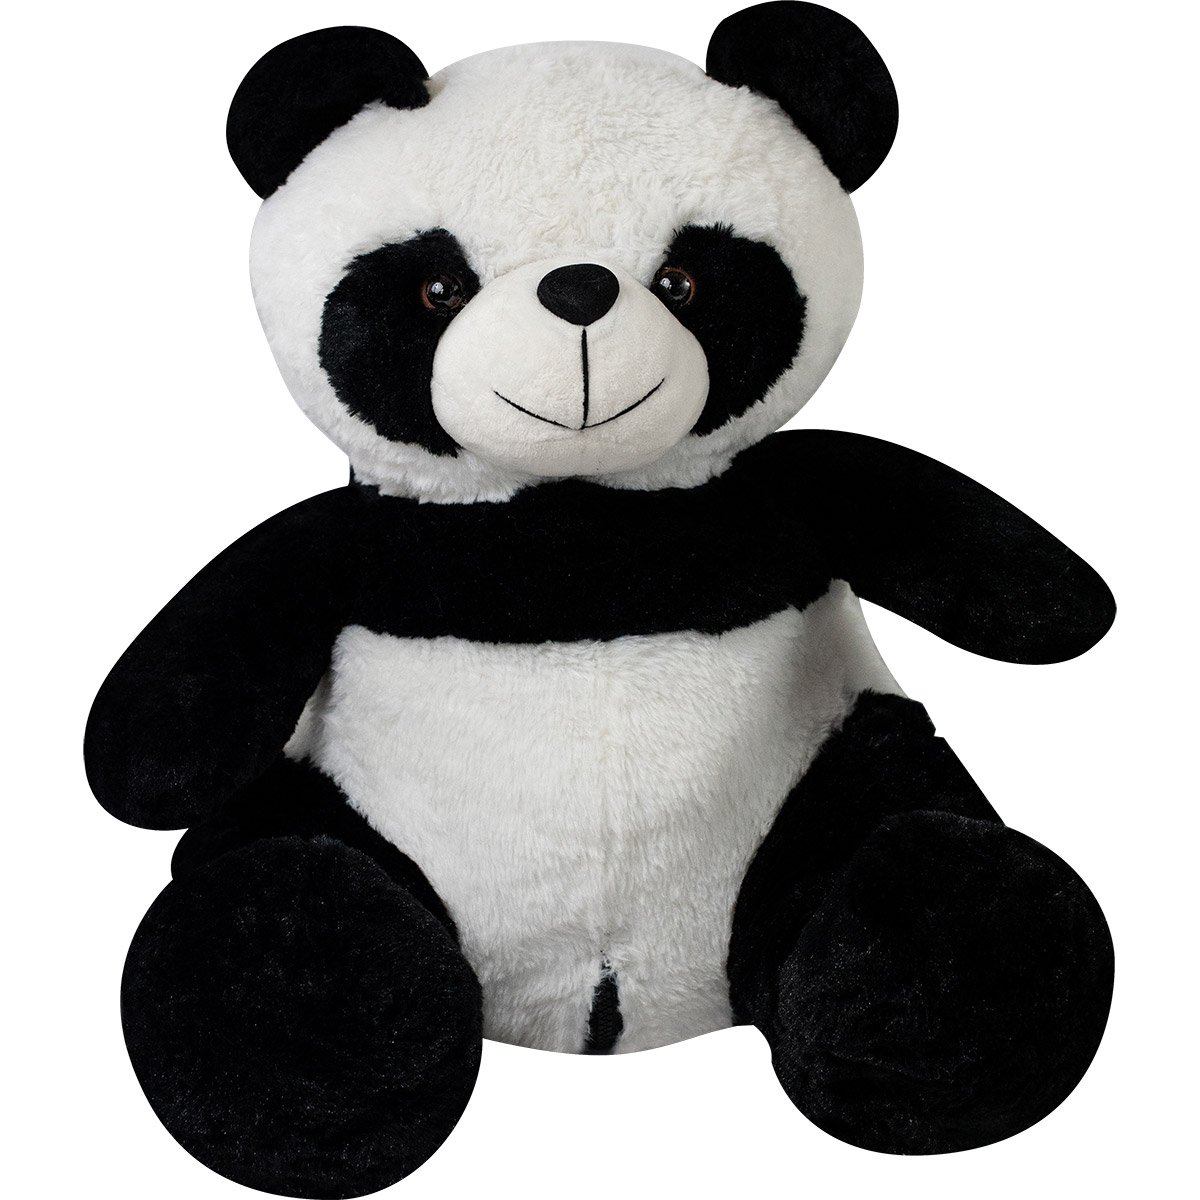 Acheter Peluche Panda en forme de boule, 40 cm en ligne?